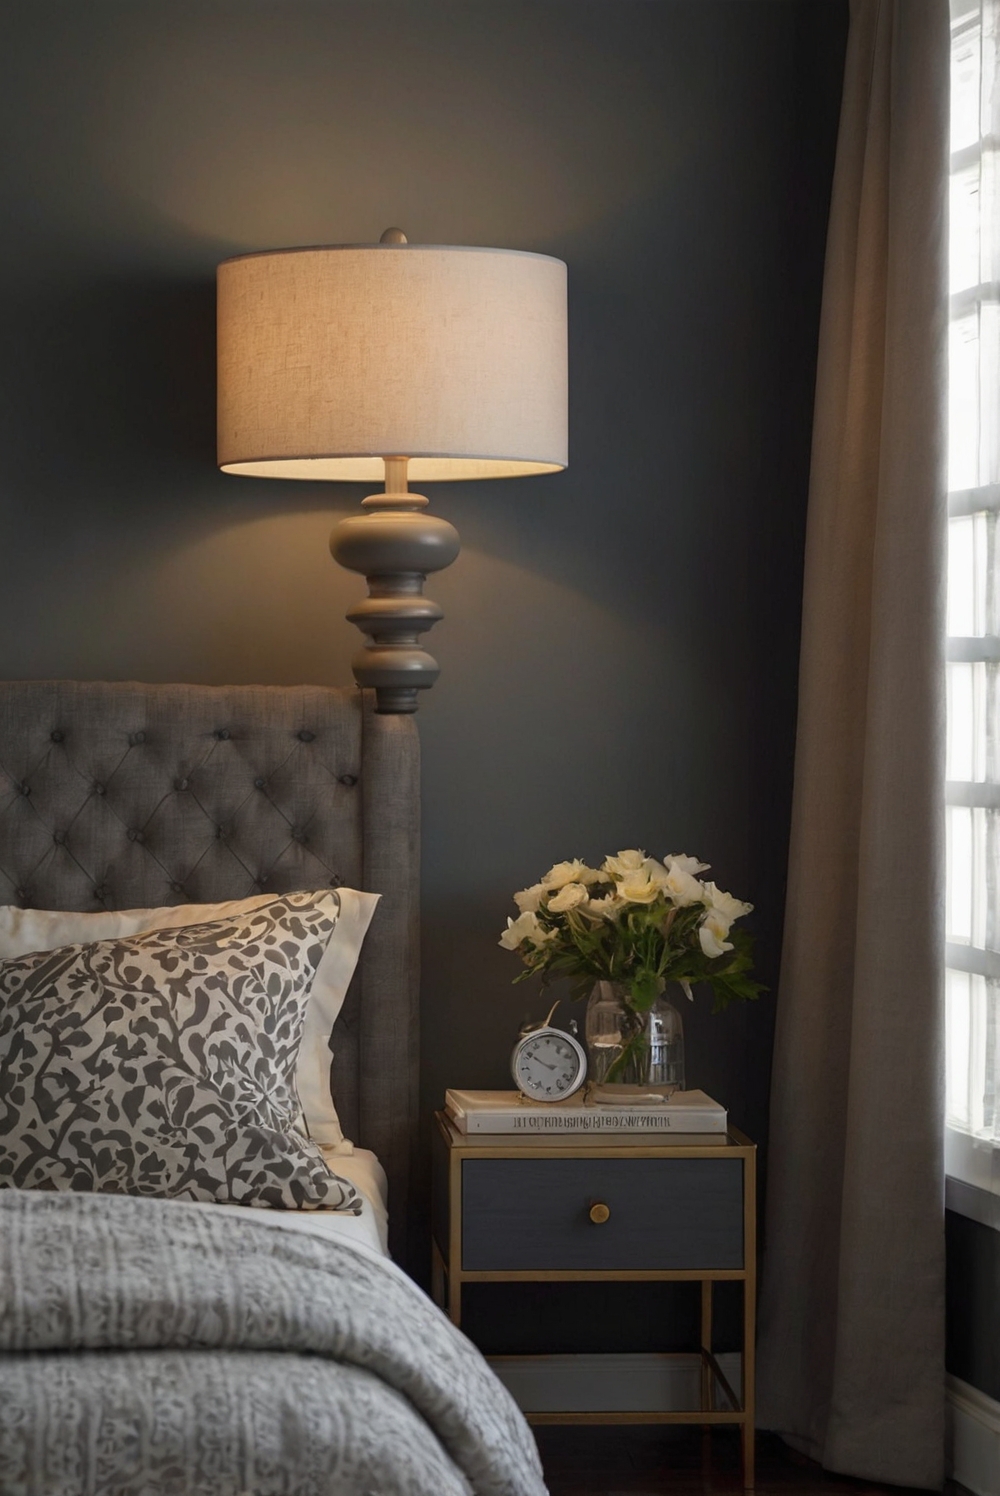 bedside lamp lighting, home interior lighting, bedroom lighting design, interior decor lighting.